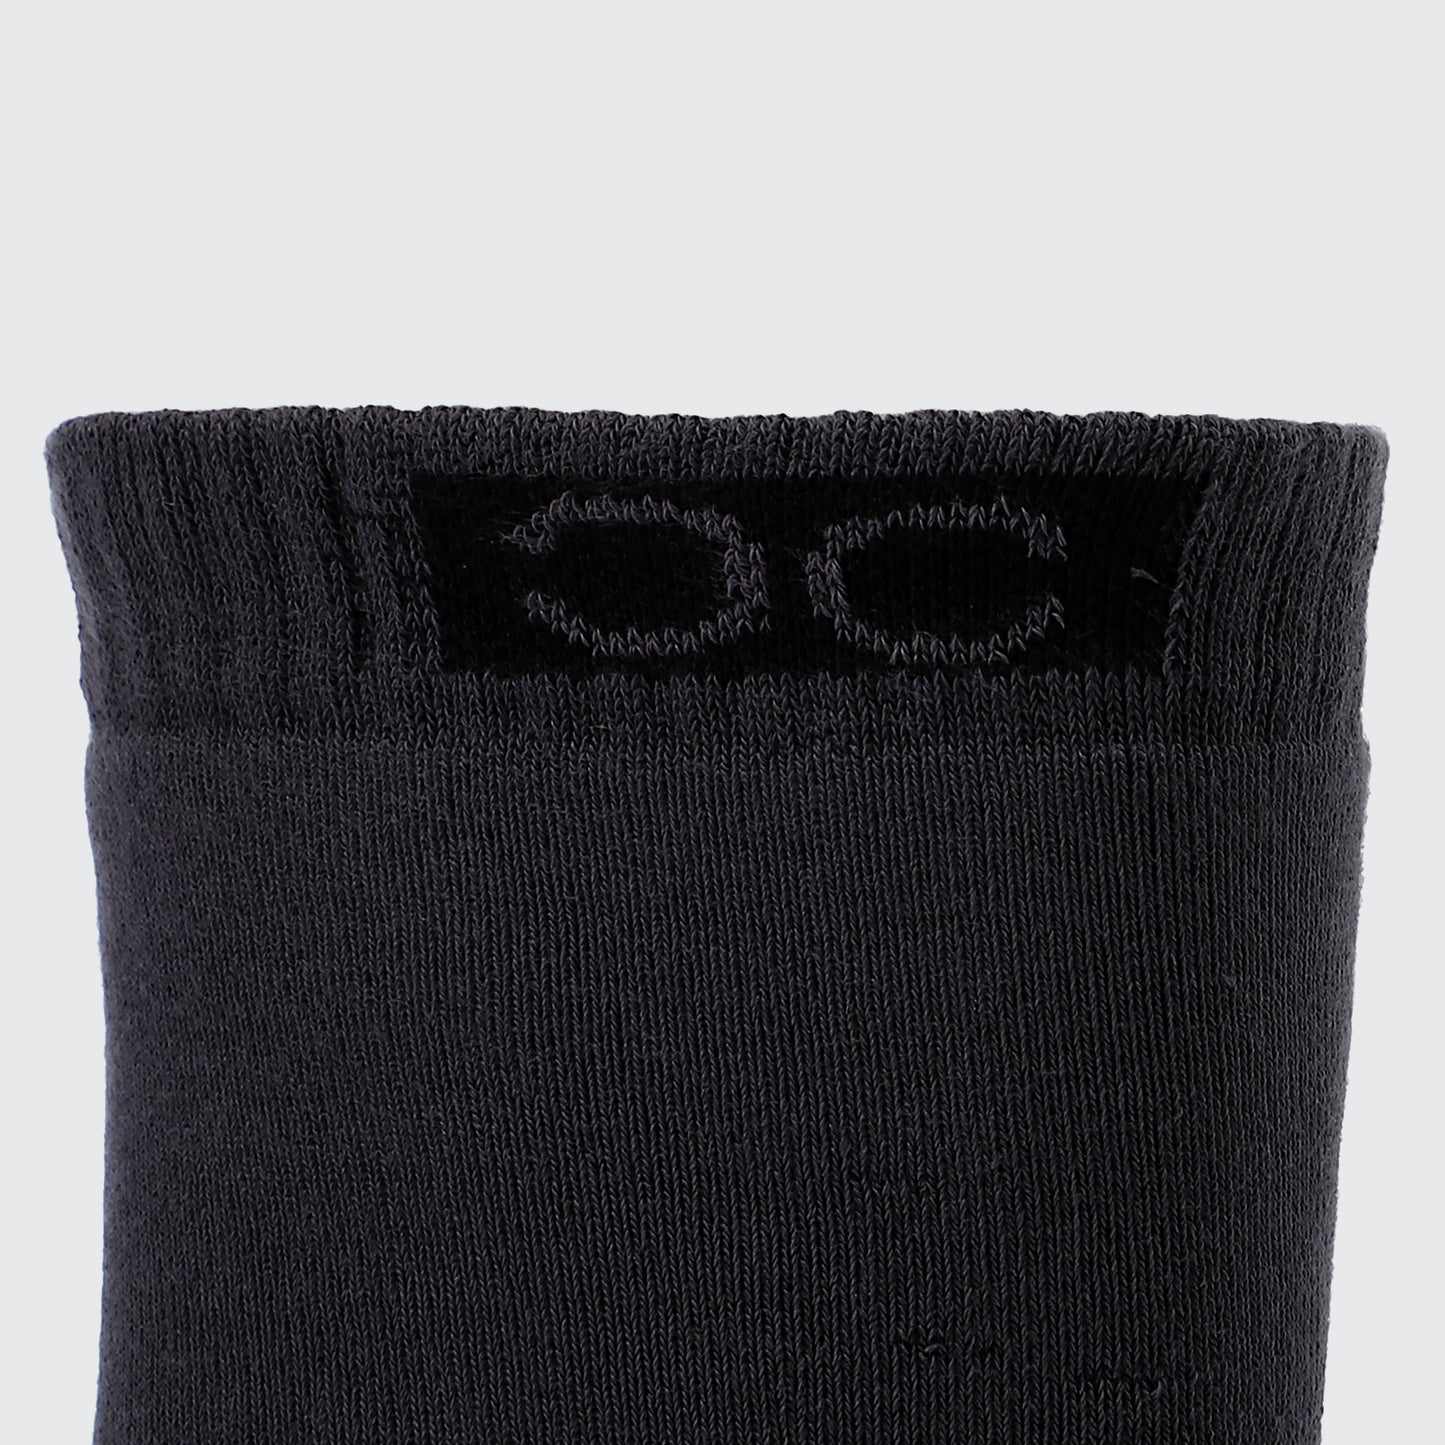 Men Thermal Mid Calf Cotton Socks - Pack Of 3 -ریاضة رجالى فوطة كاملة